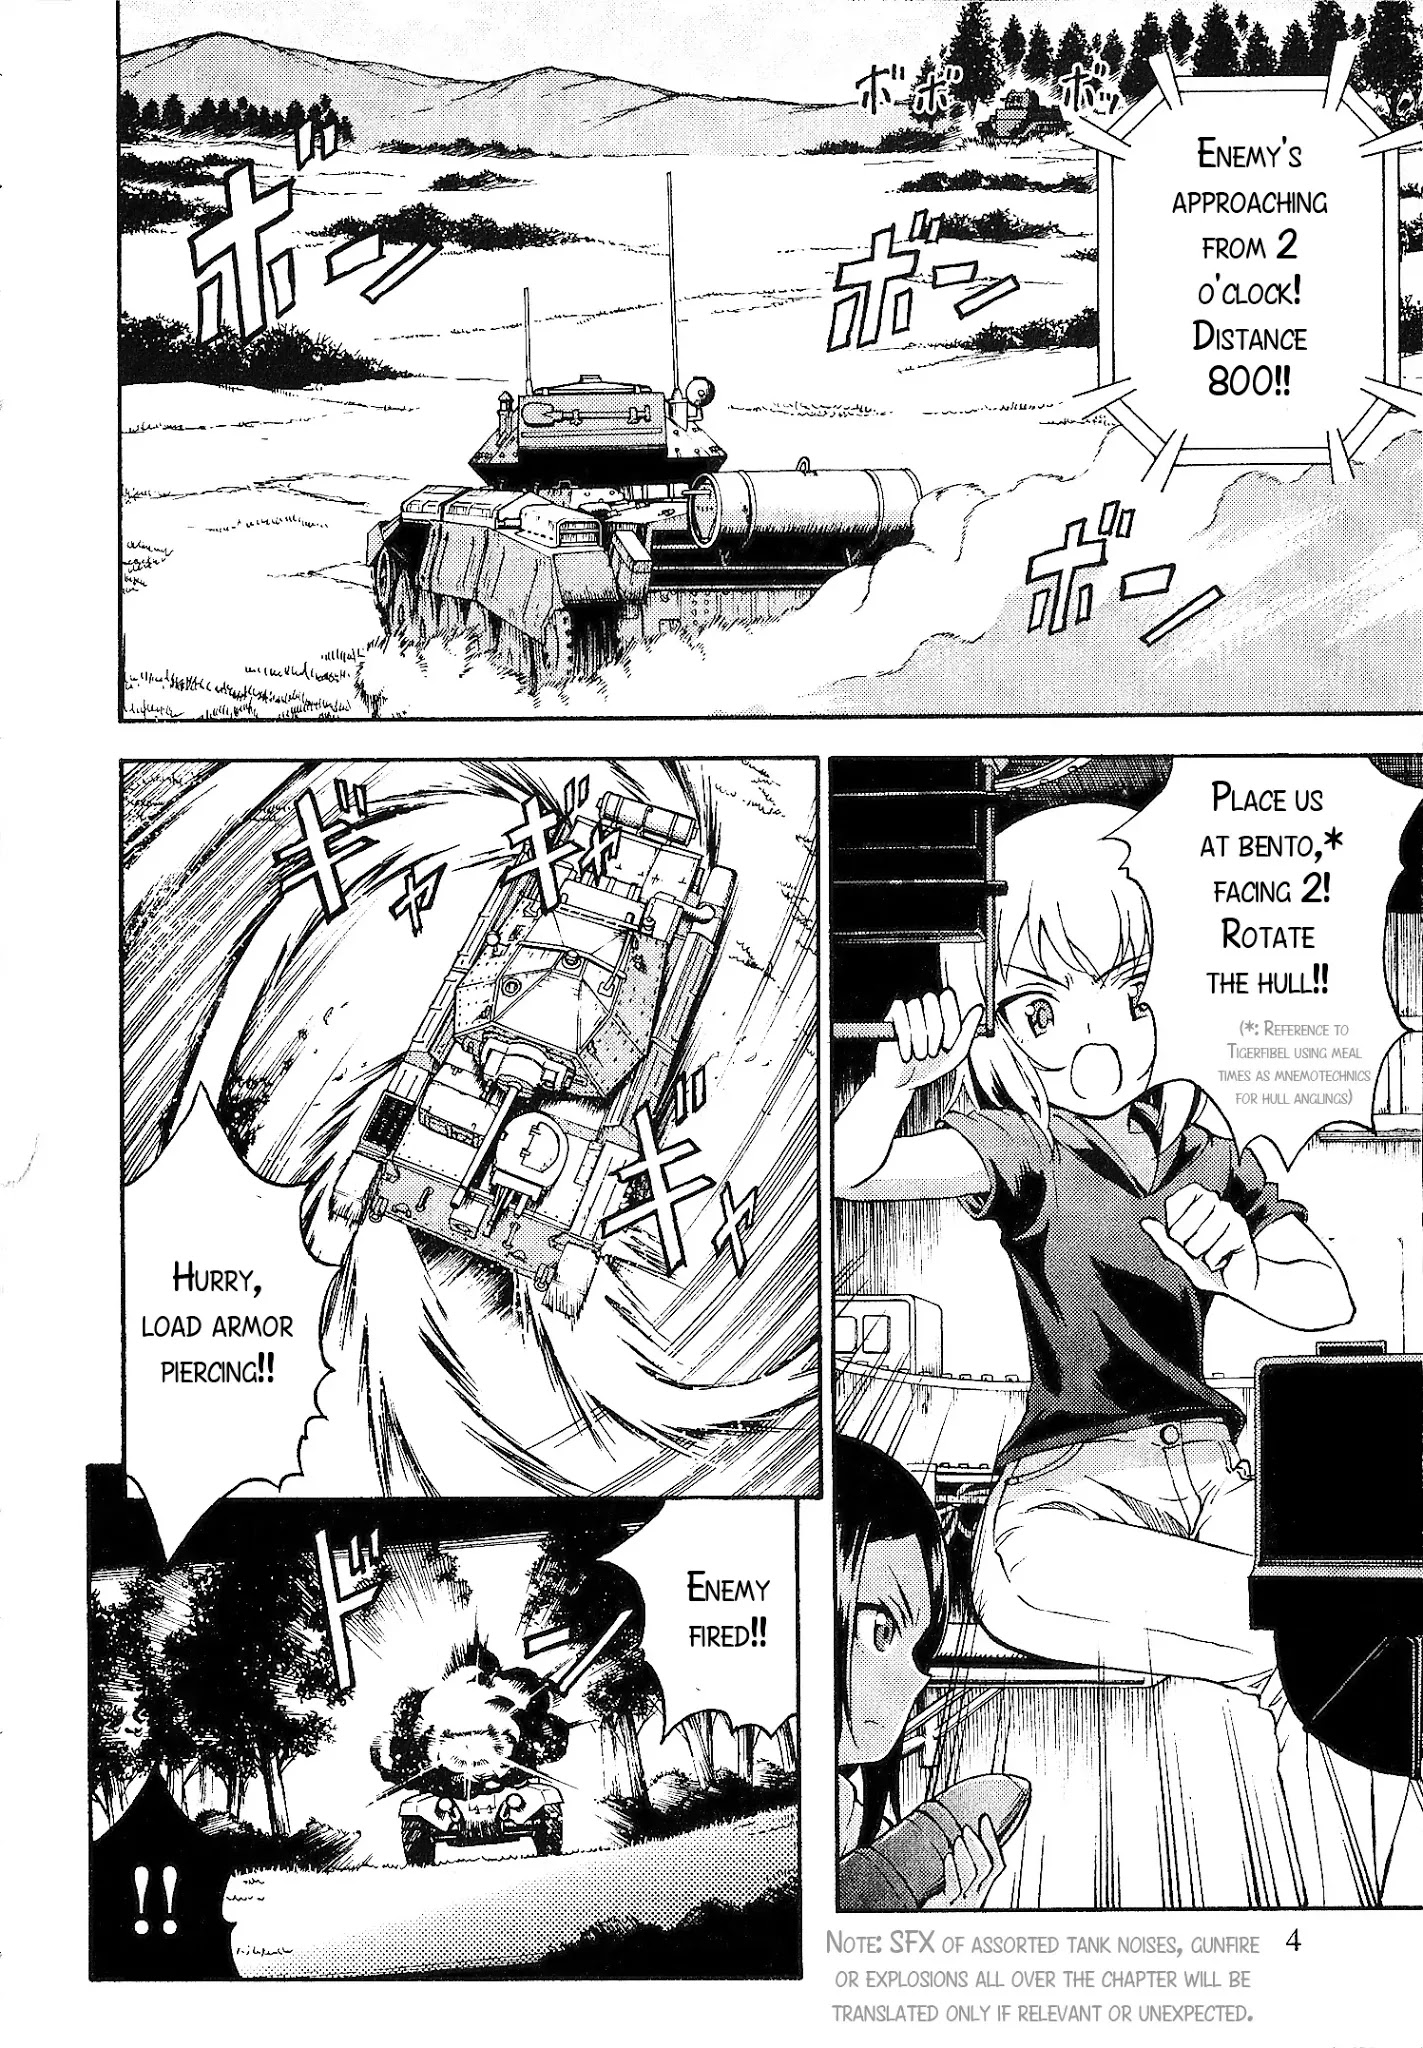 Girls & Panzer - Comic Anthology - Page 2